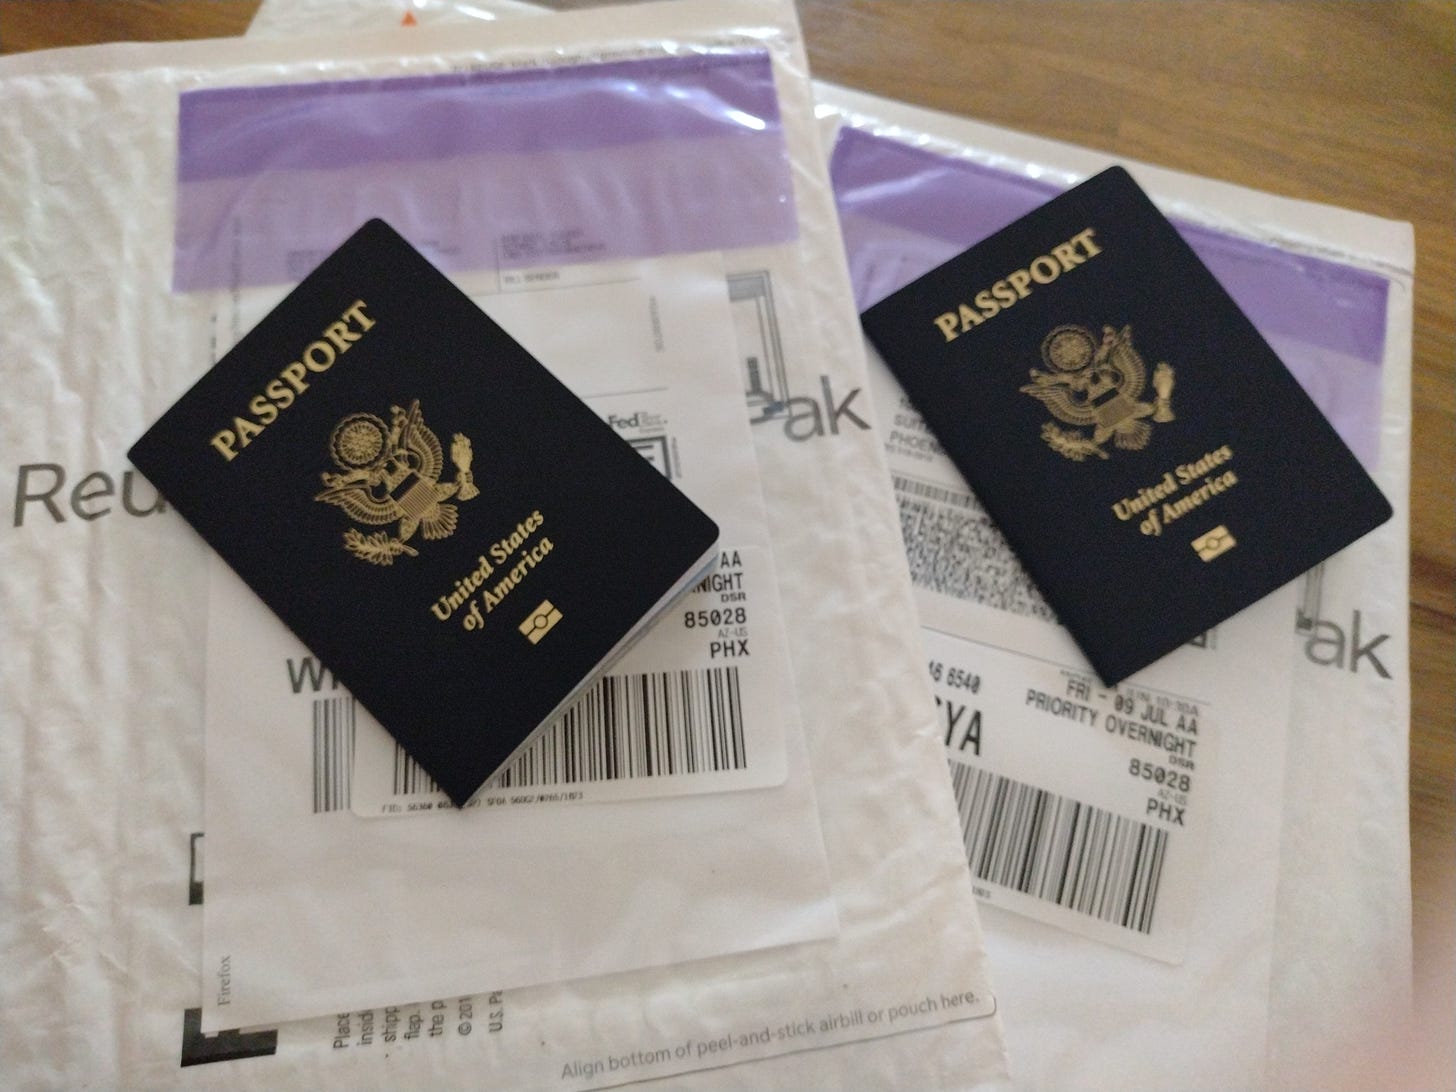 Two U.S. passports